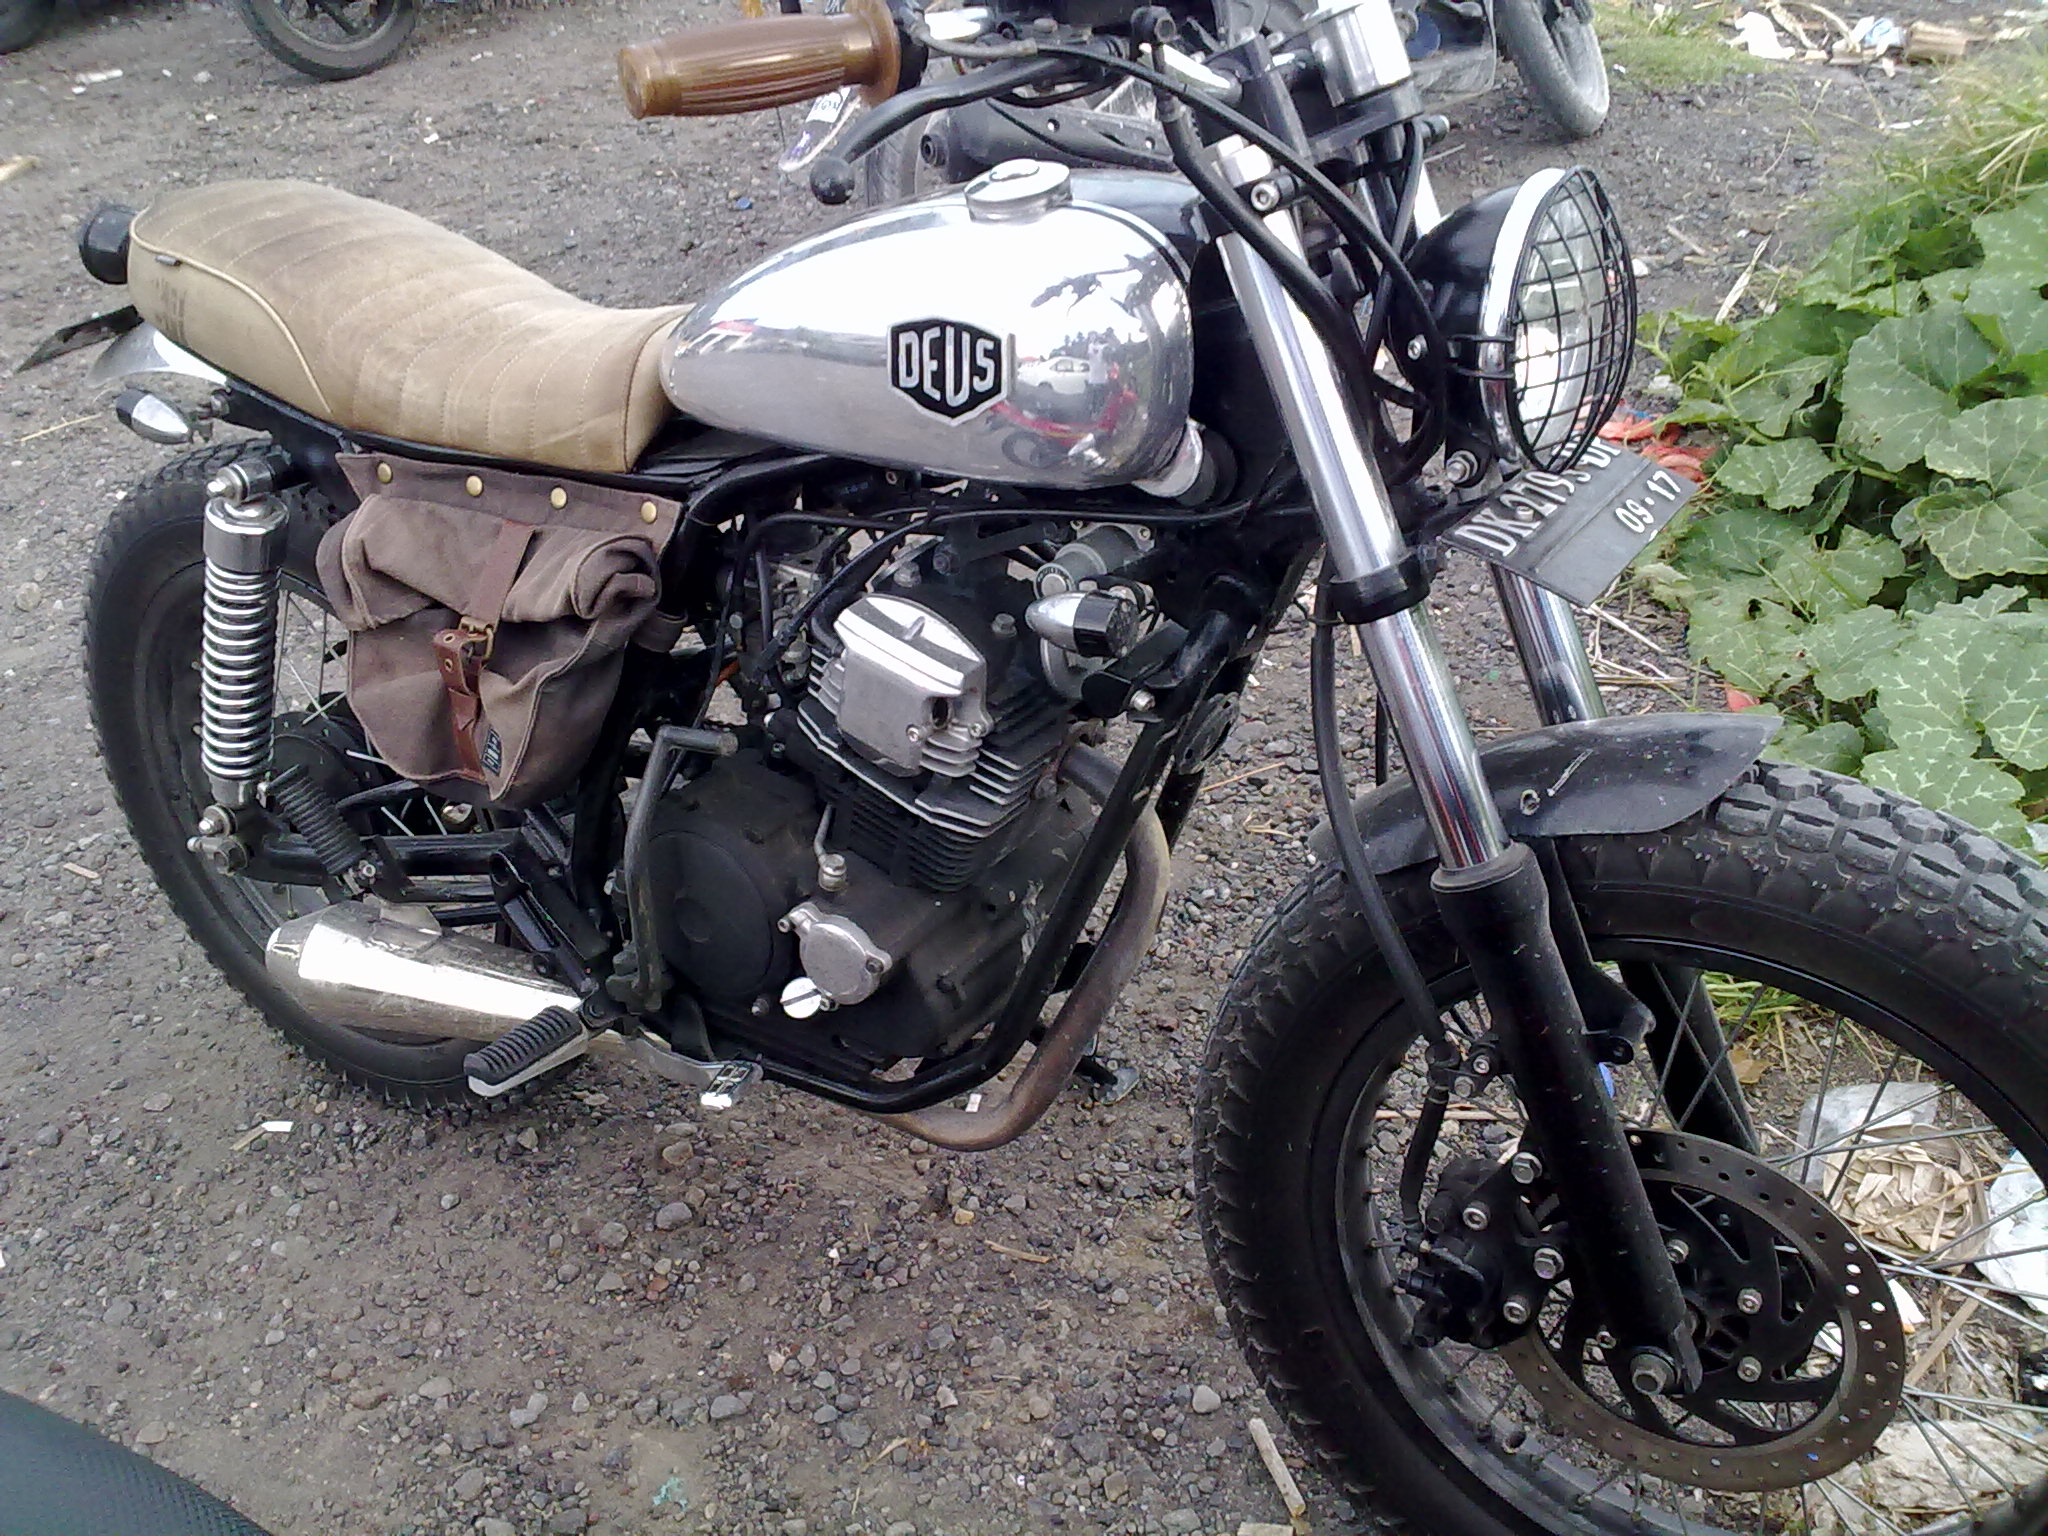 Ketemu motor racikan Deus Bali di parkiran  Bintangjati's 